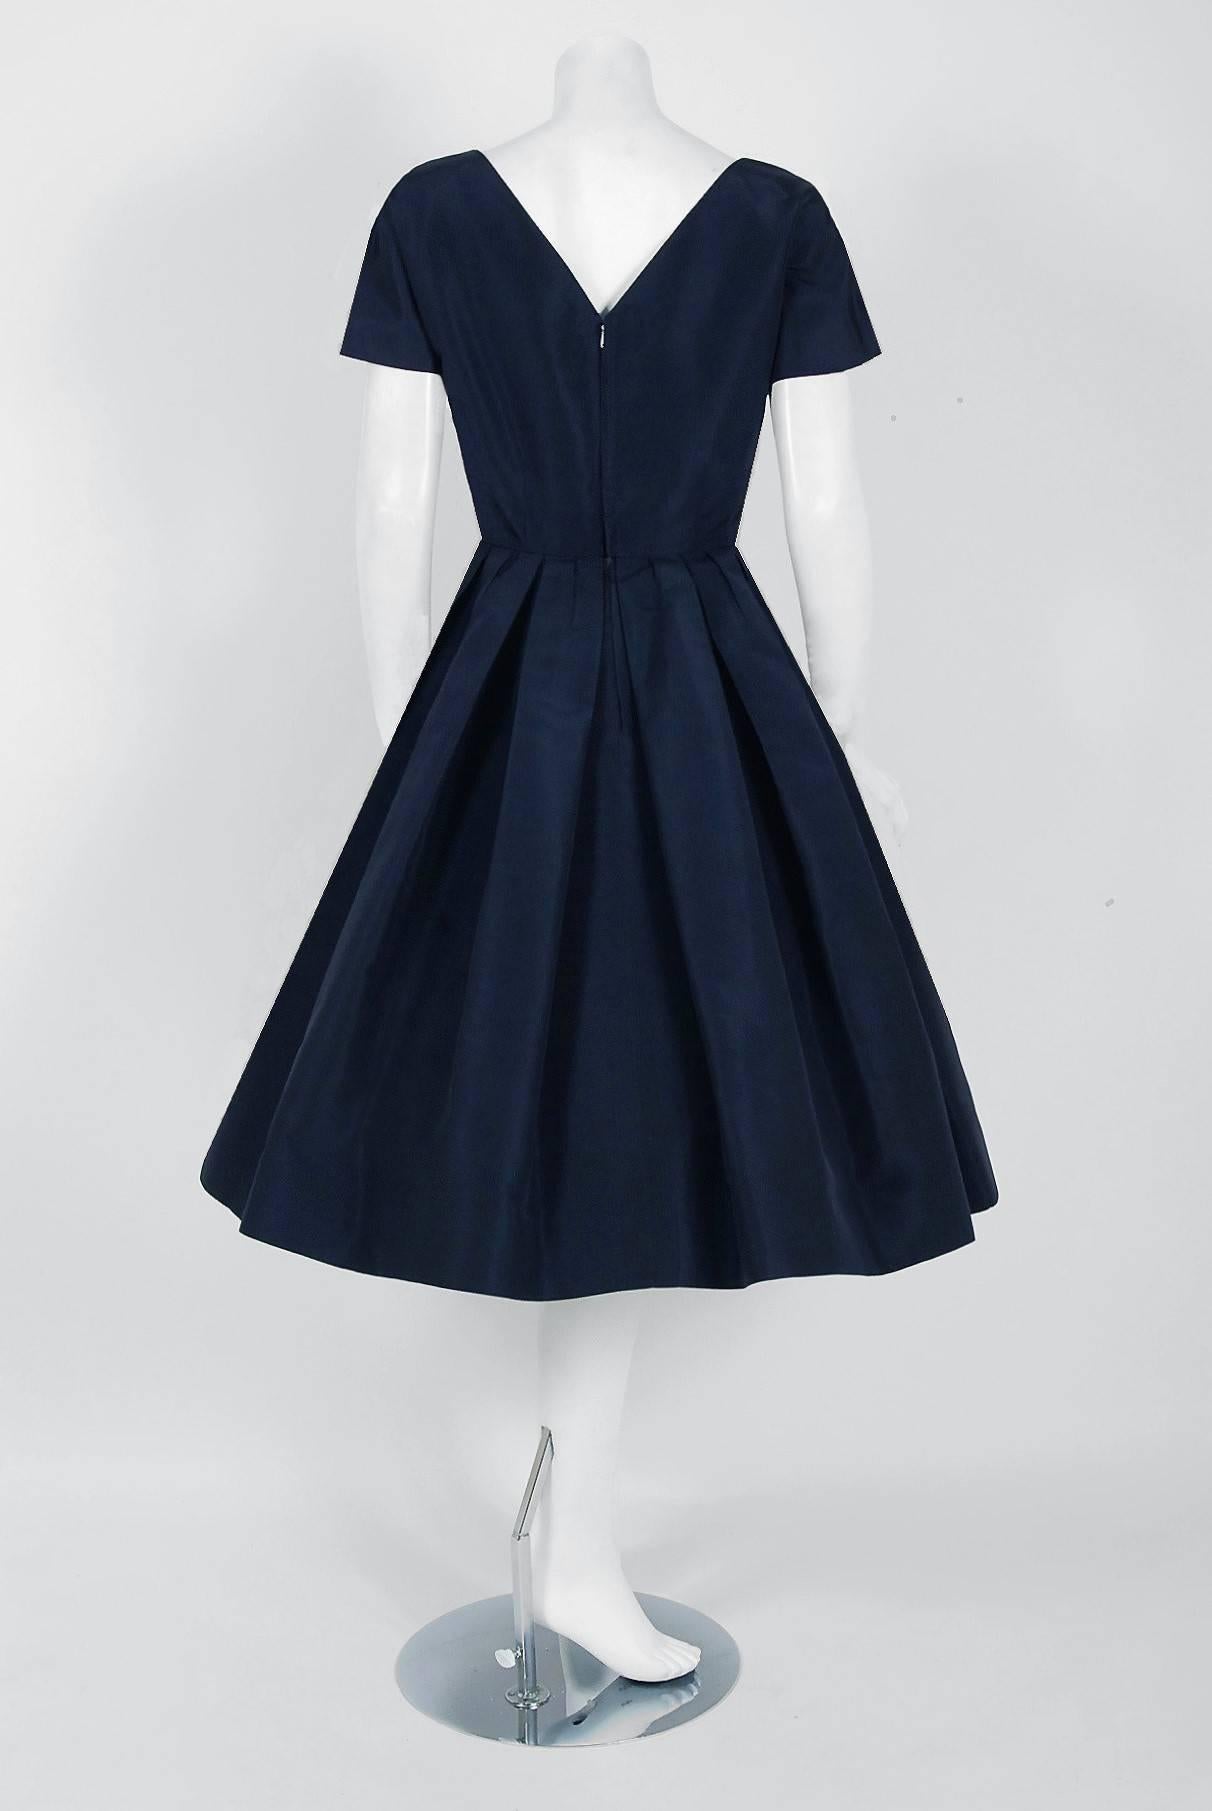 Black 1954 Christian Dior Original Navy Blue Silk Pockets Low-Plunge Full Skirt Dress